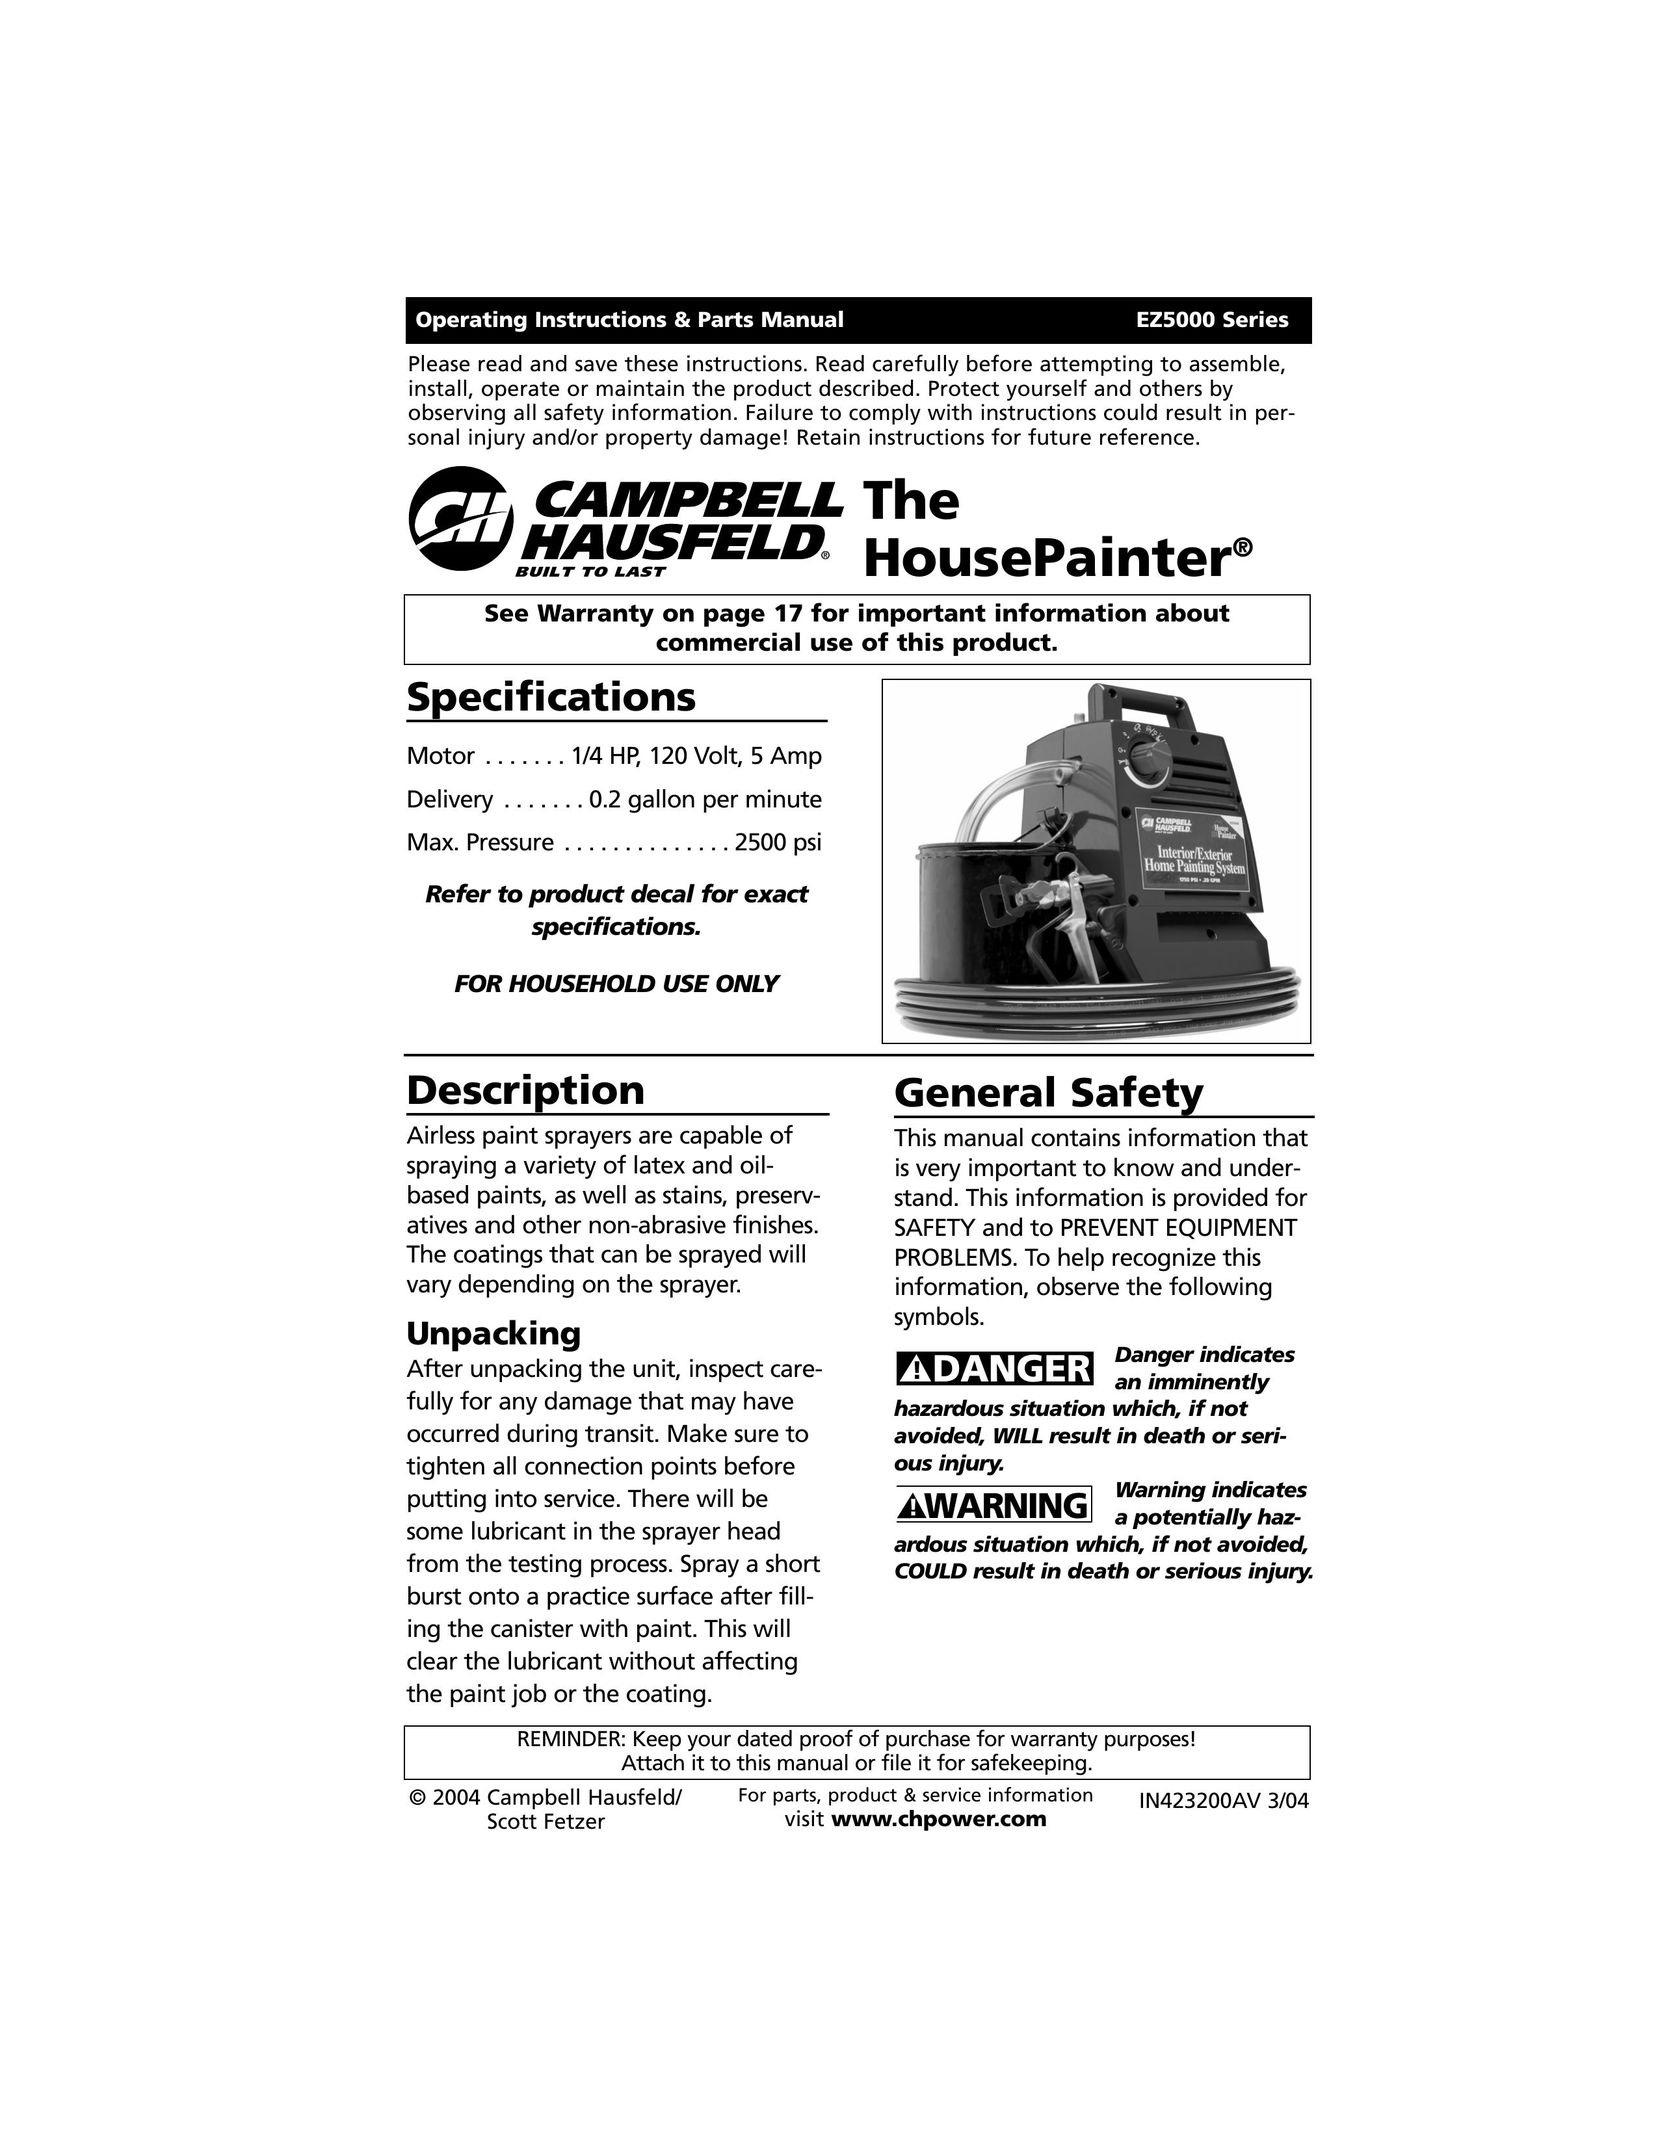 Campbell Hausfeld EZ5000 Paint Sprayer User Manual